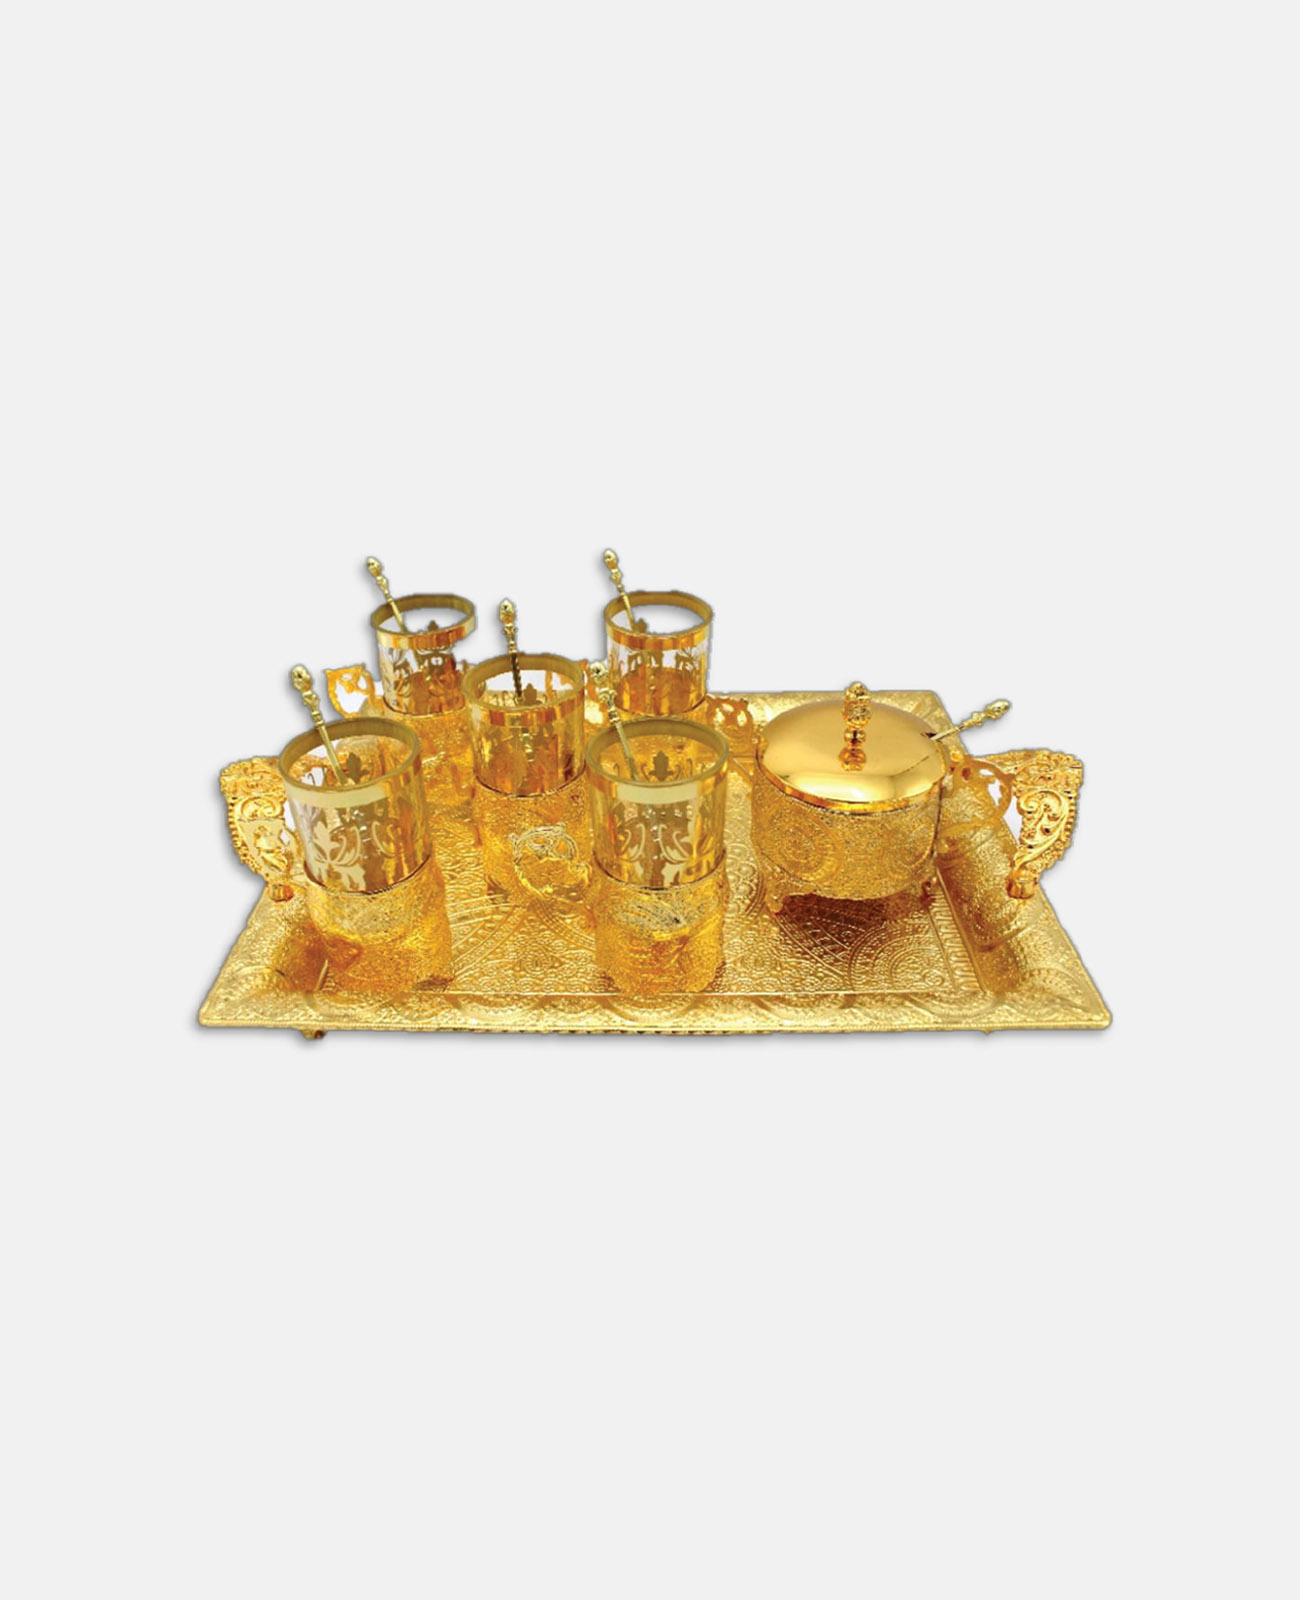 Fancy Golden Tea Set - 6 Cups a Sugar Pot and serving Tray/H 18-7